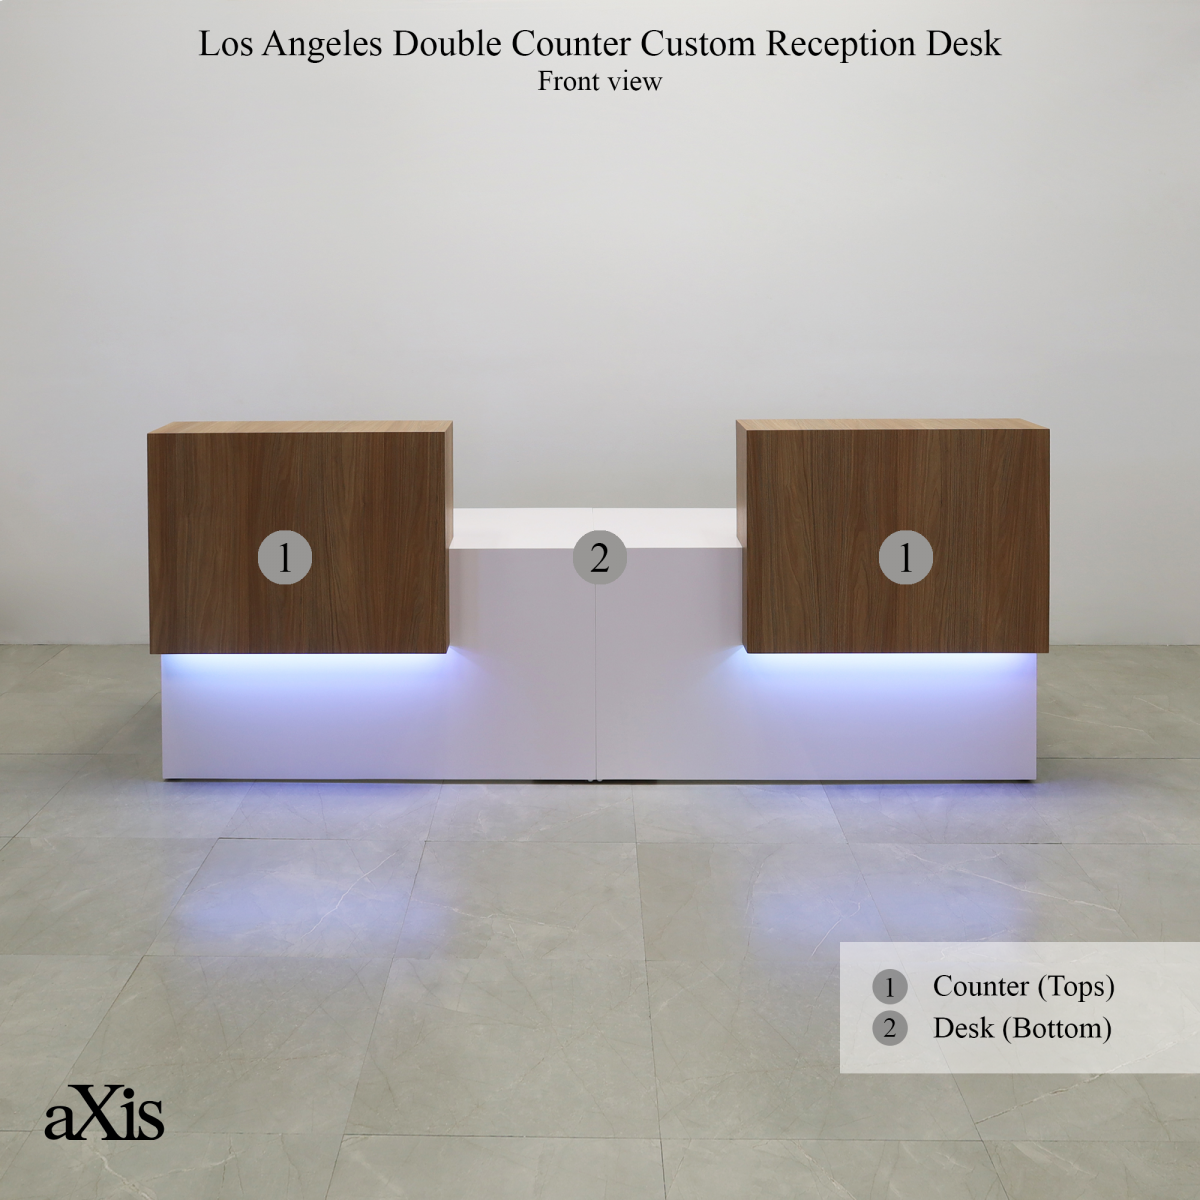 Los Angeles Double Counter Custom Reception Desk